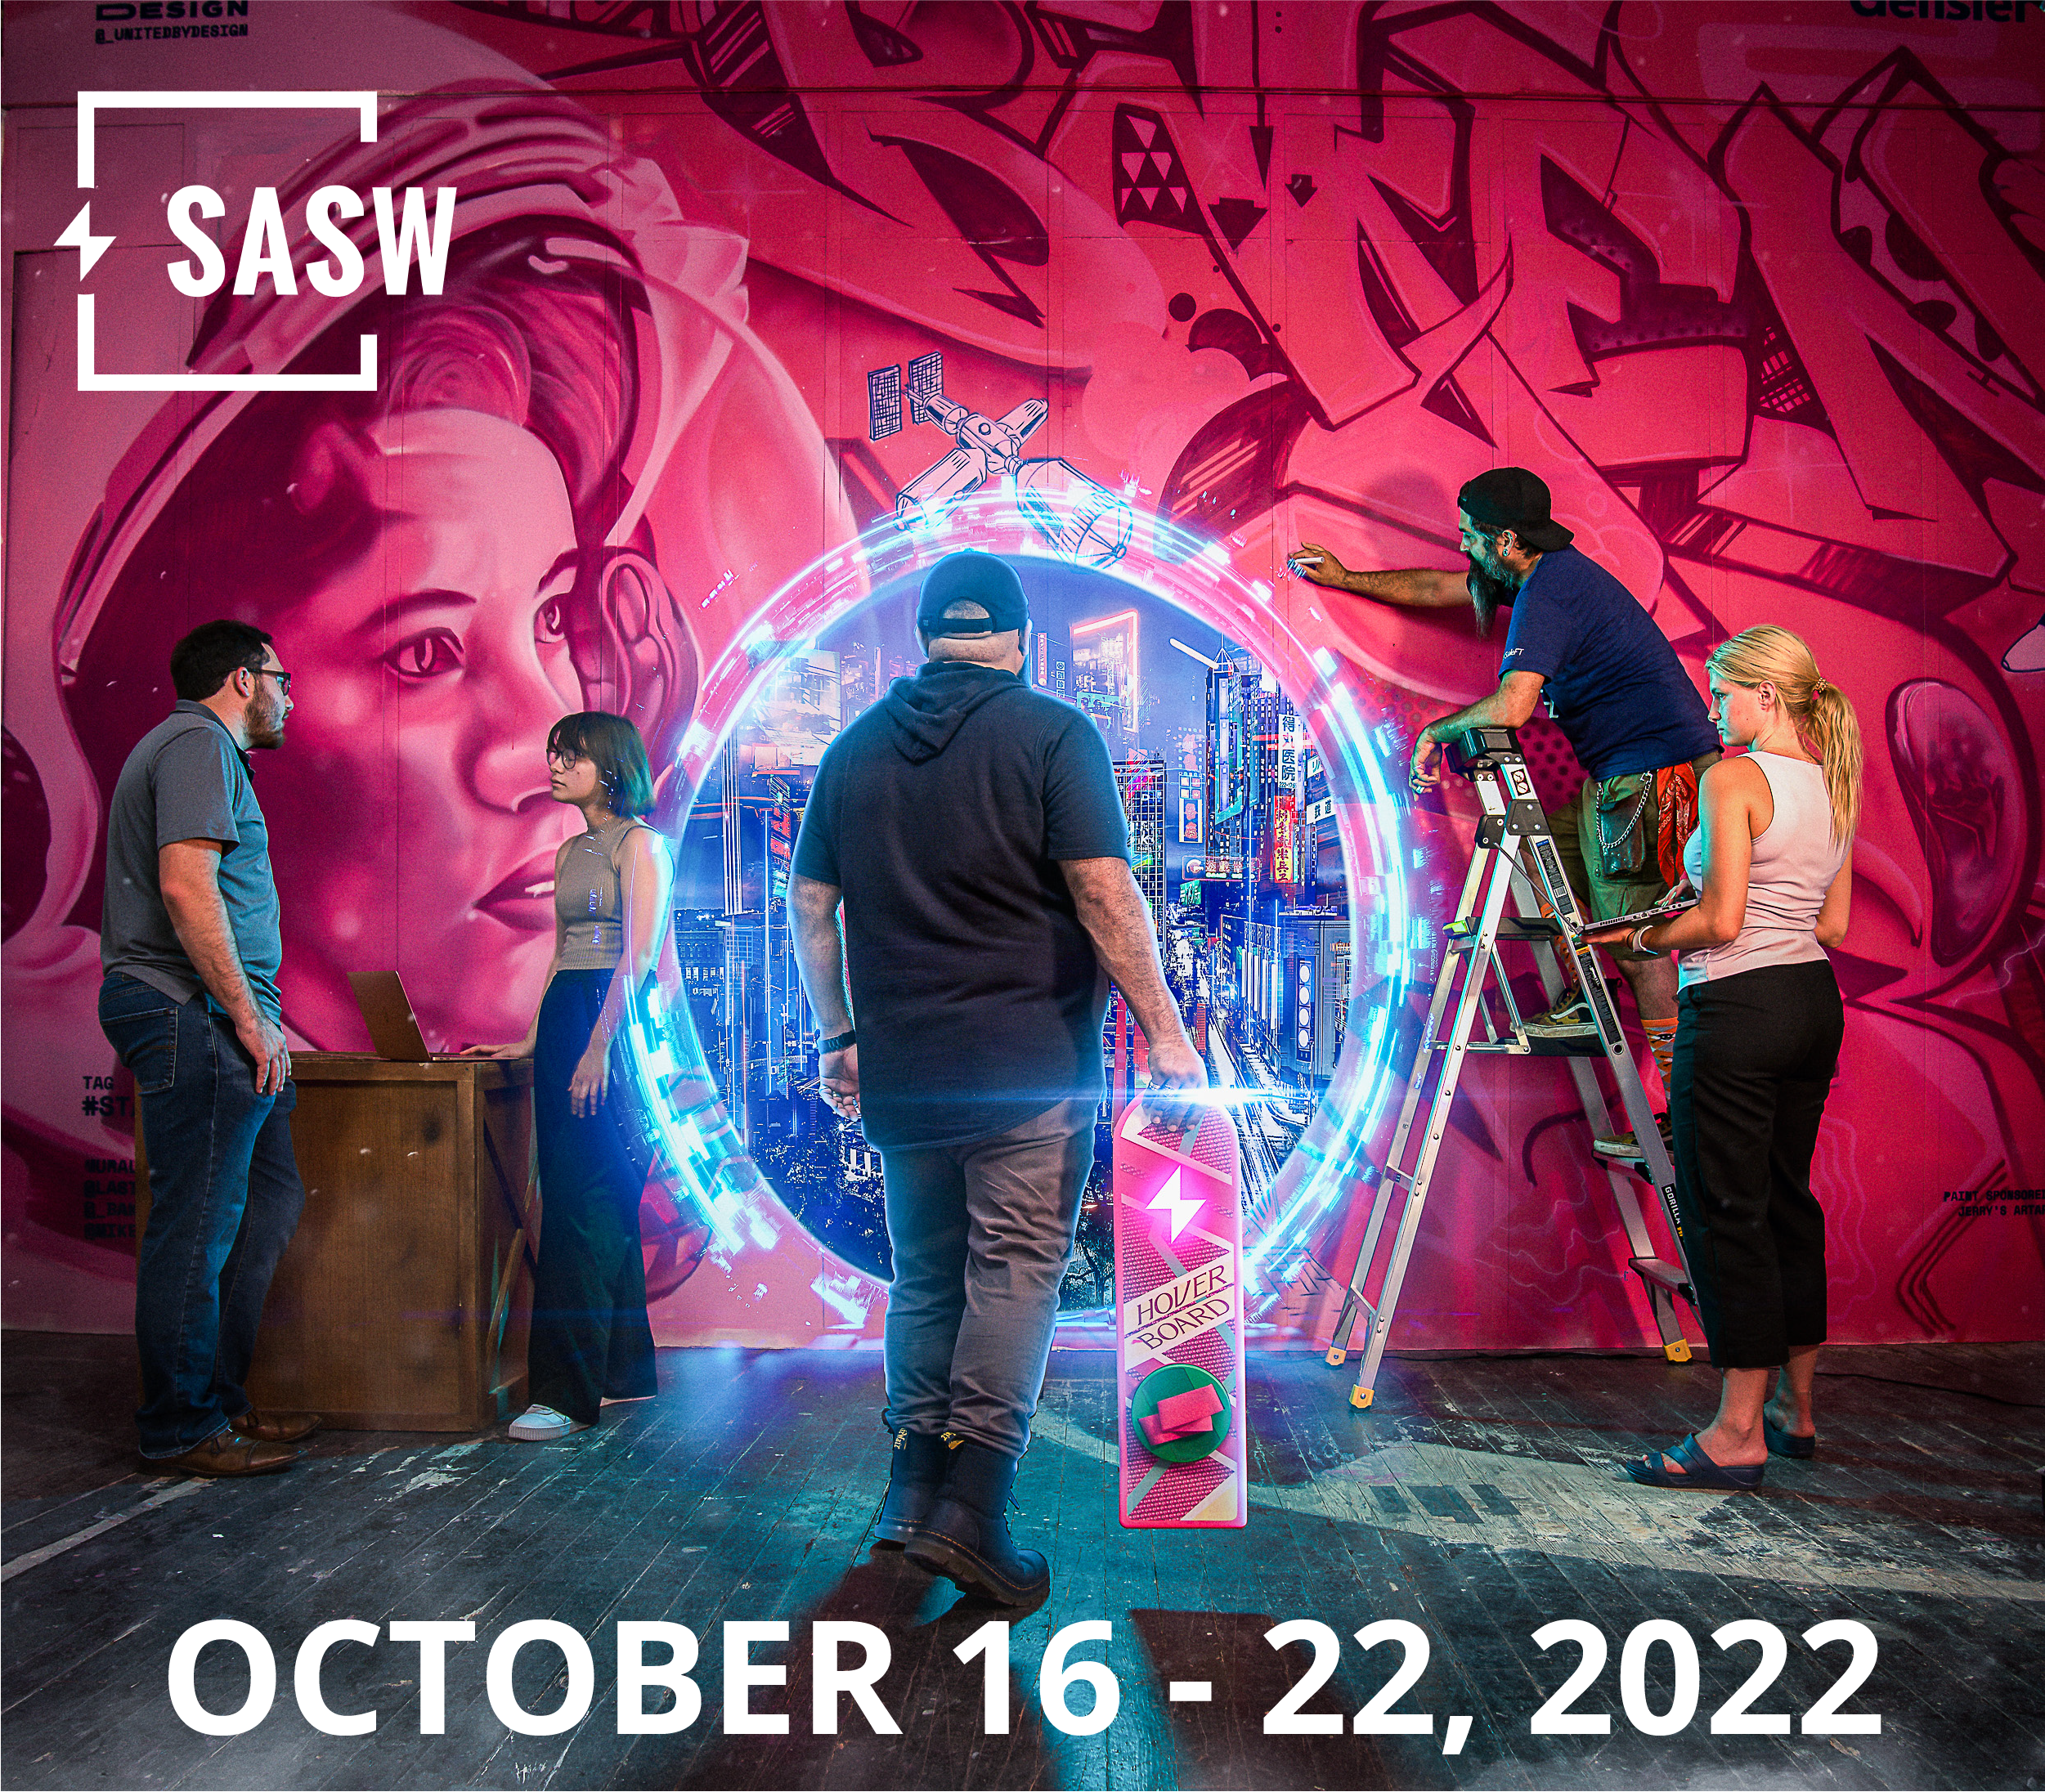 SASW 2022 Music EXP and Art Exhibition @ La Zona Cultural - 2023